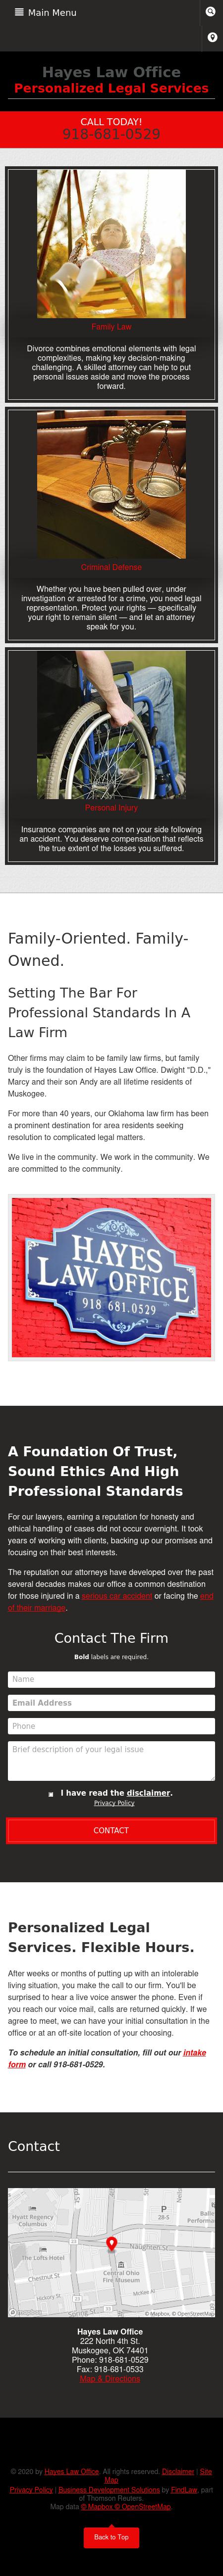 Hayes Law Office - Muskogee OK Lawyers